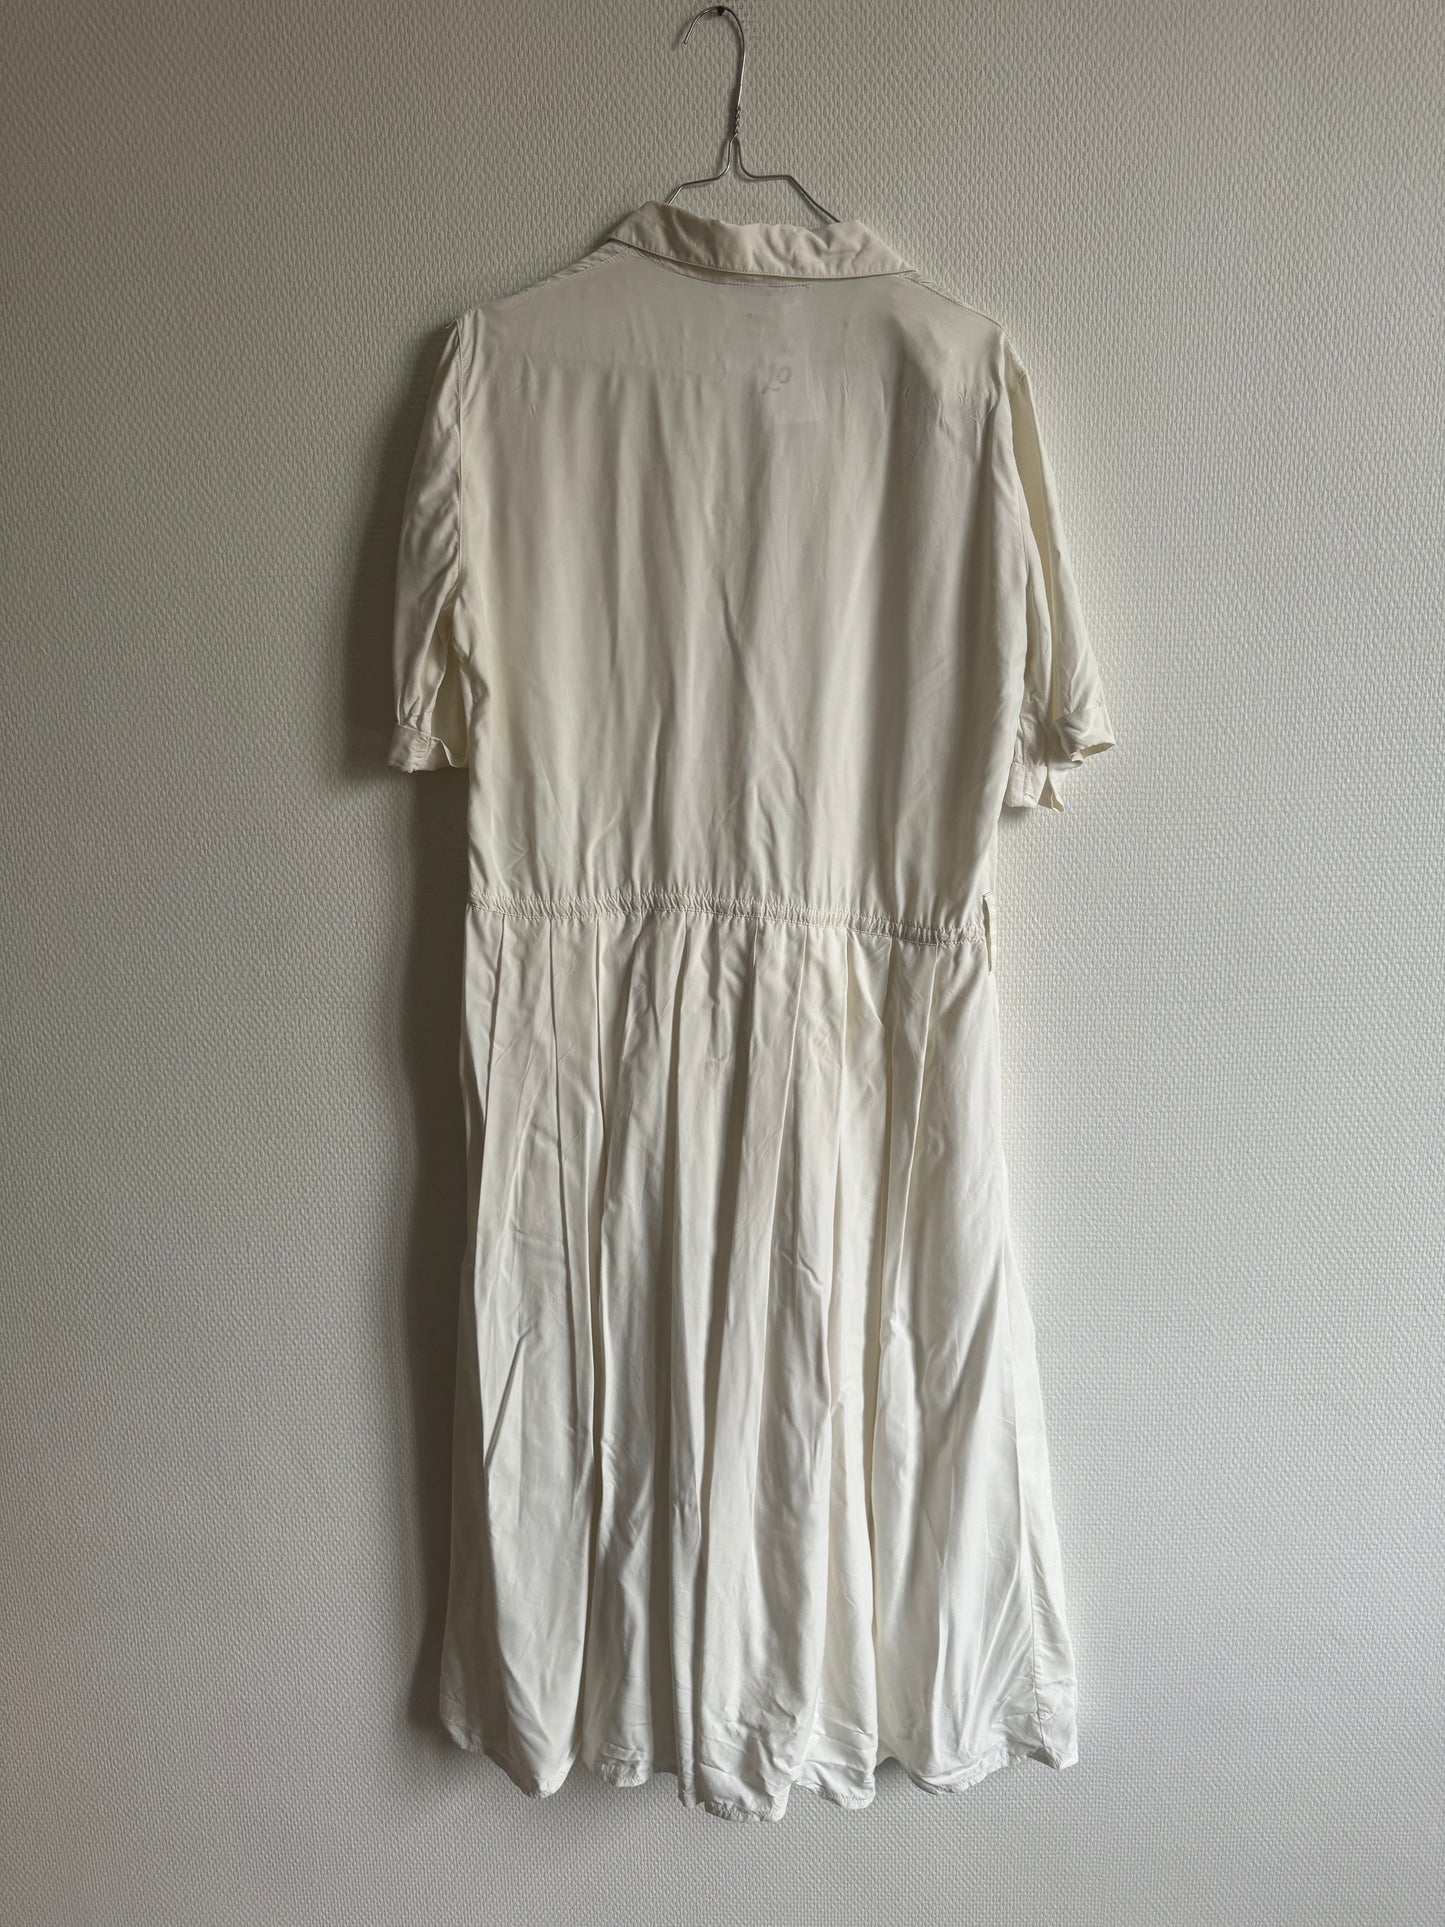 Robe blanche 80s